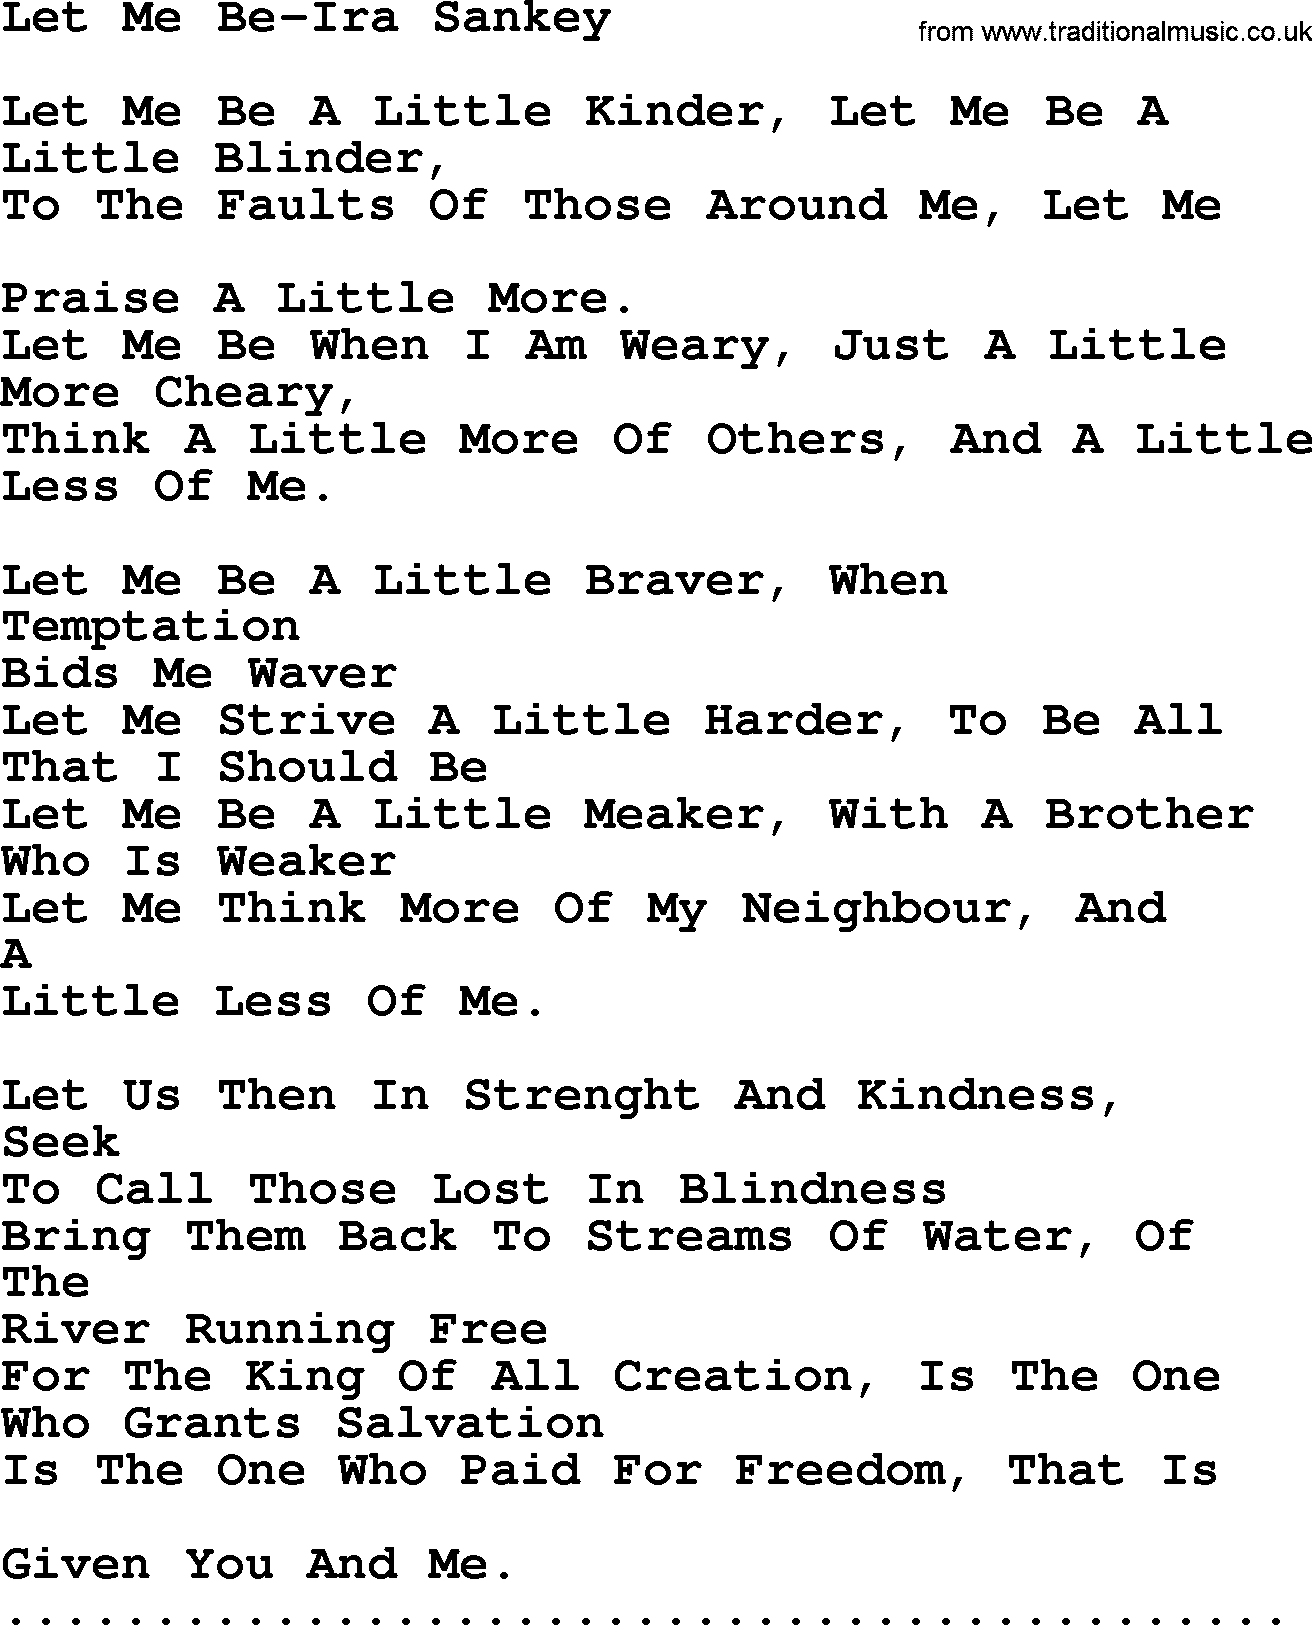 Ira Sankey hymn: Let Me Be-Ira Sankey, lyrics